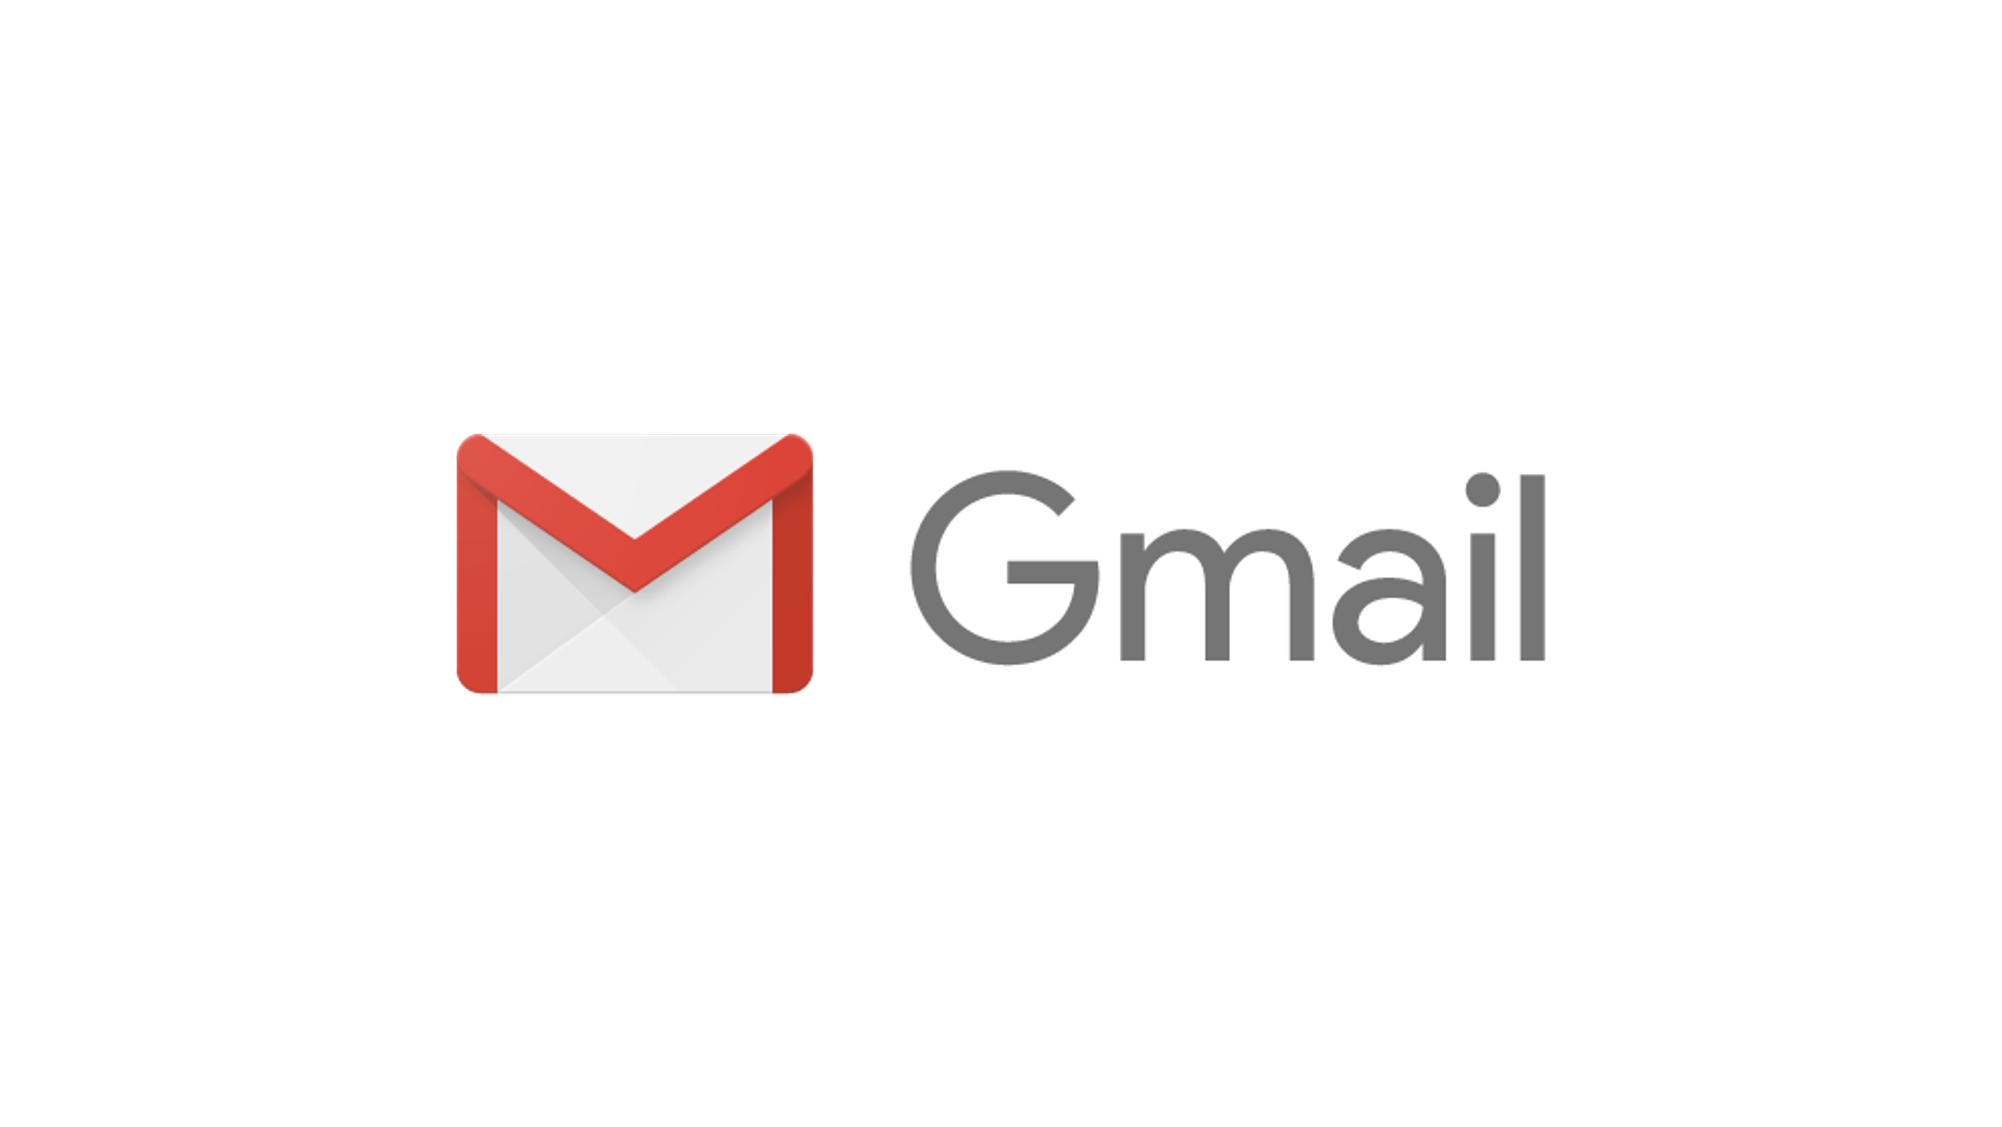 Gmail картинка. Gmail почта. Логотип гмаил. Значок гугл почты. Google play gmail